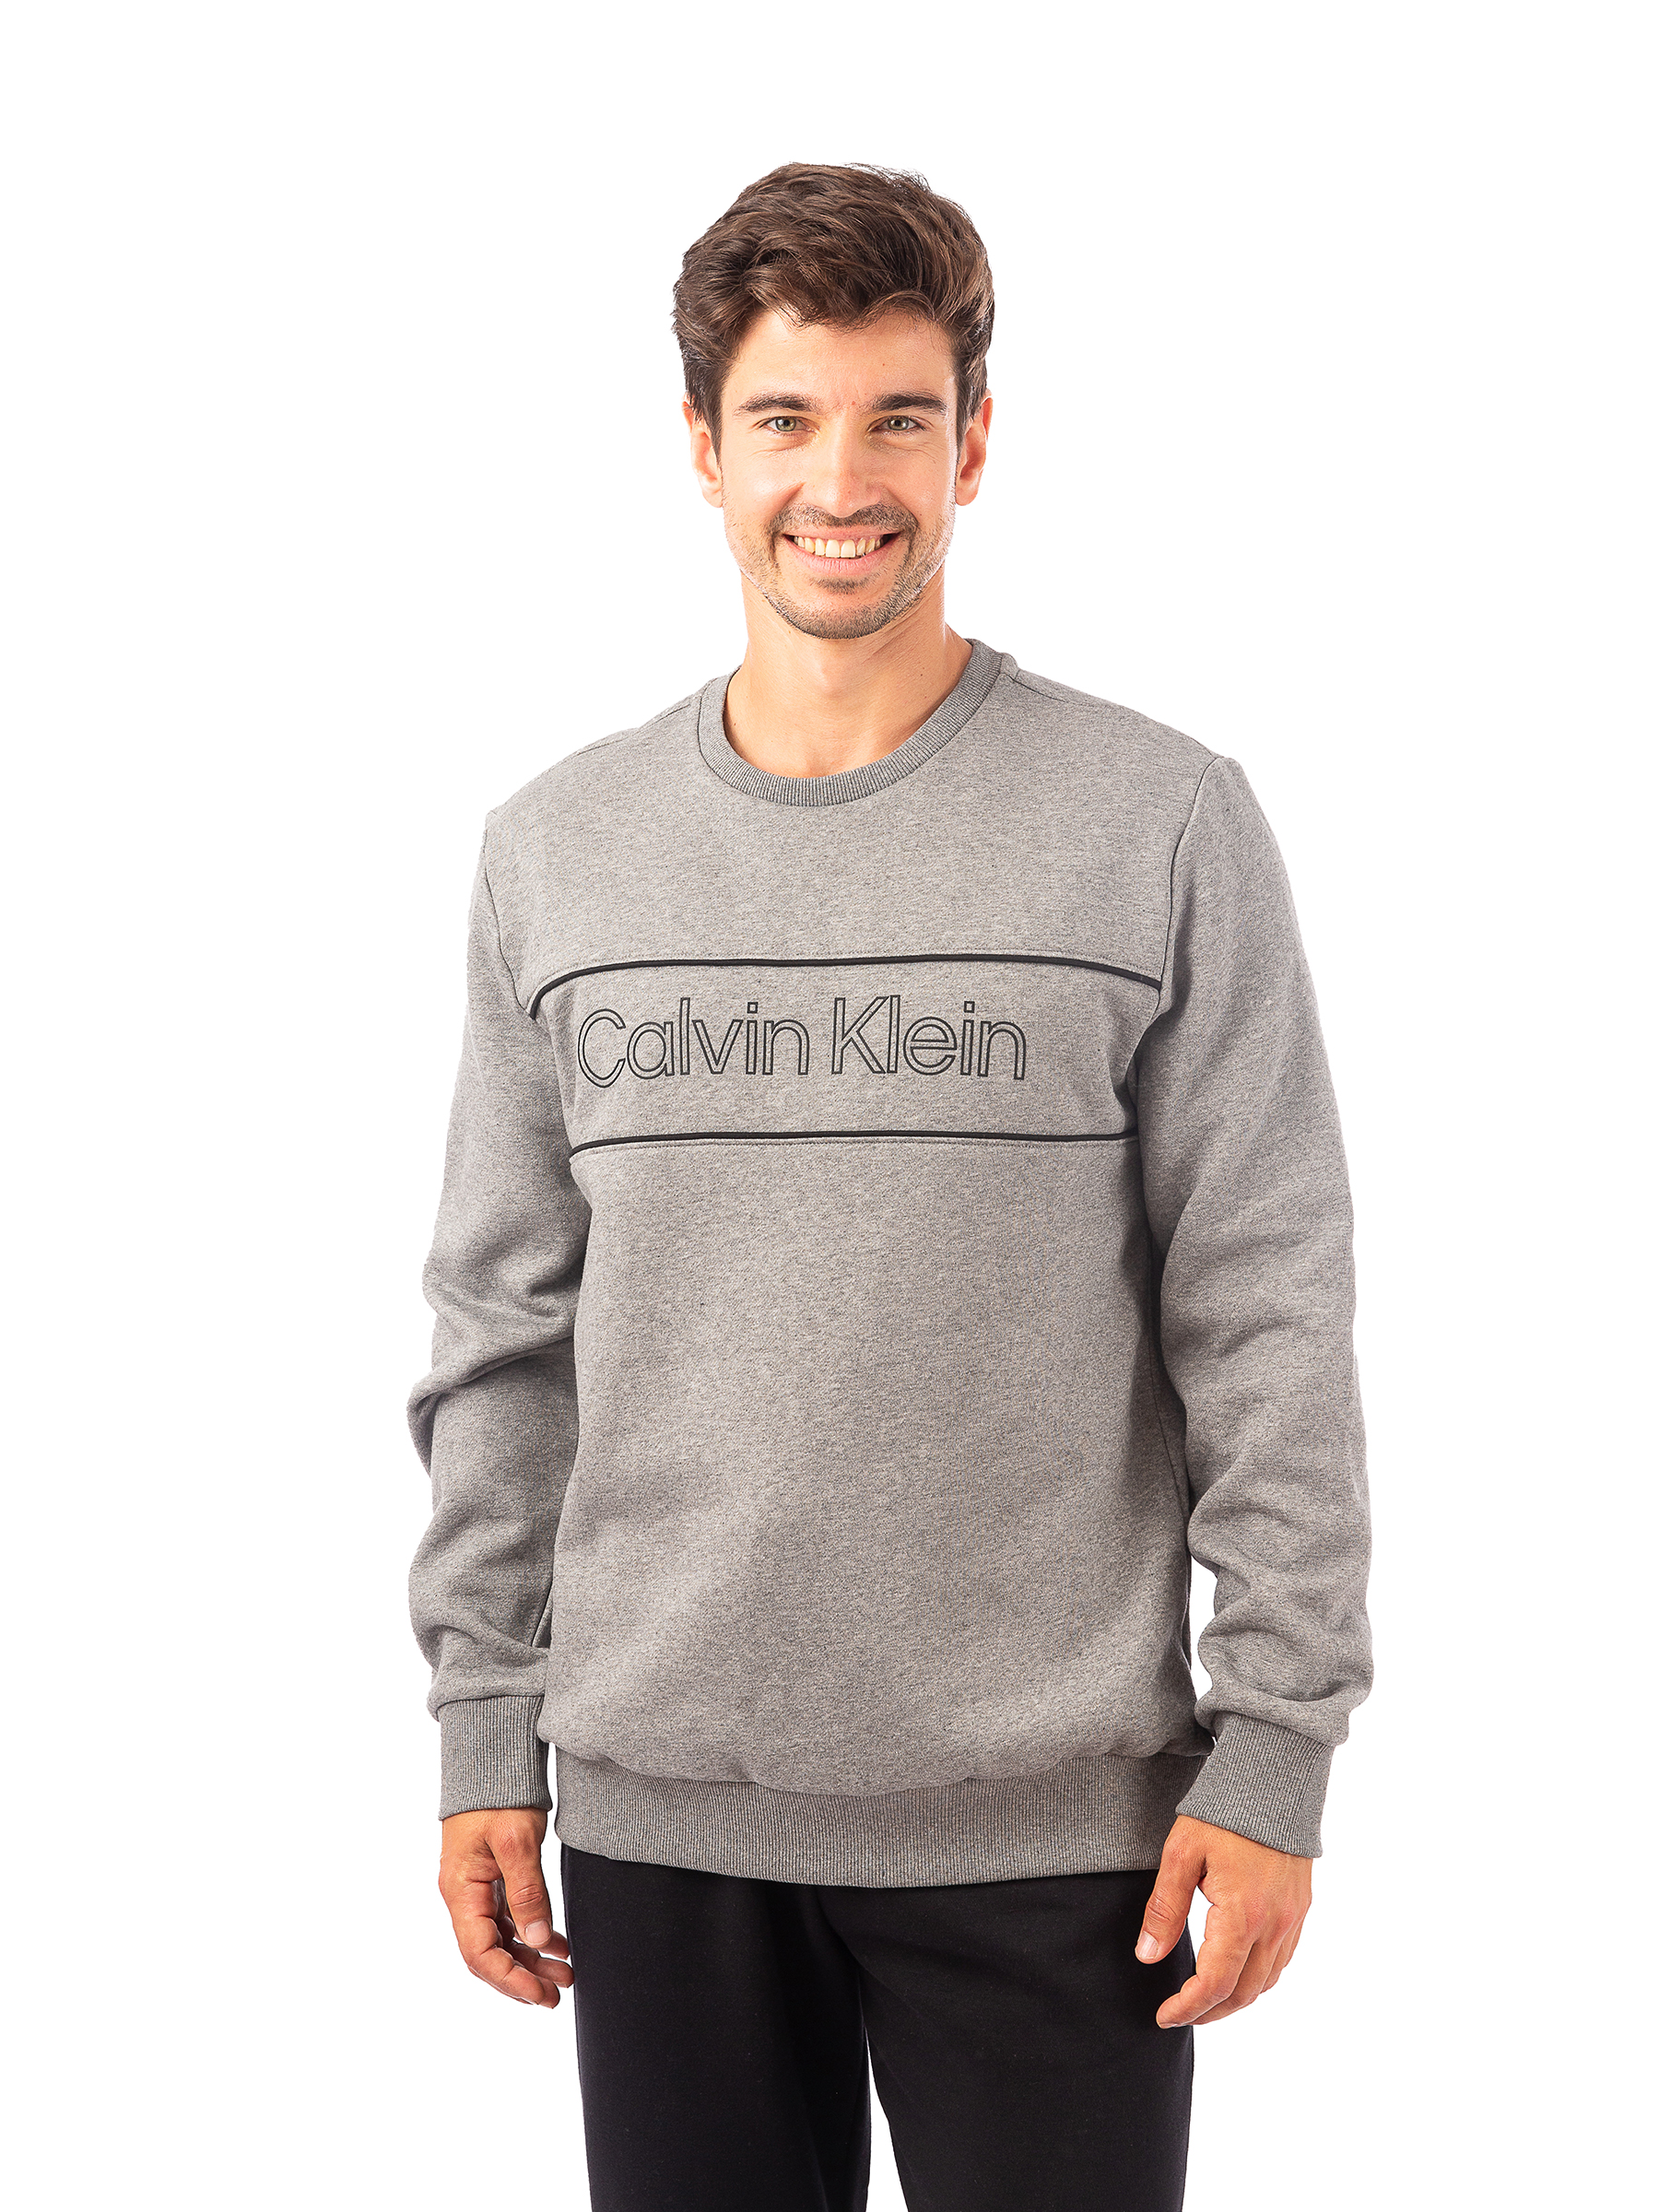 Свитшот мужской Calvin Klein 40J6242 серый M